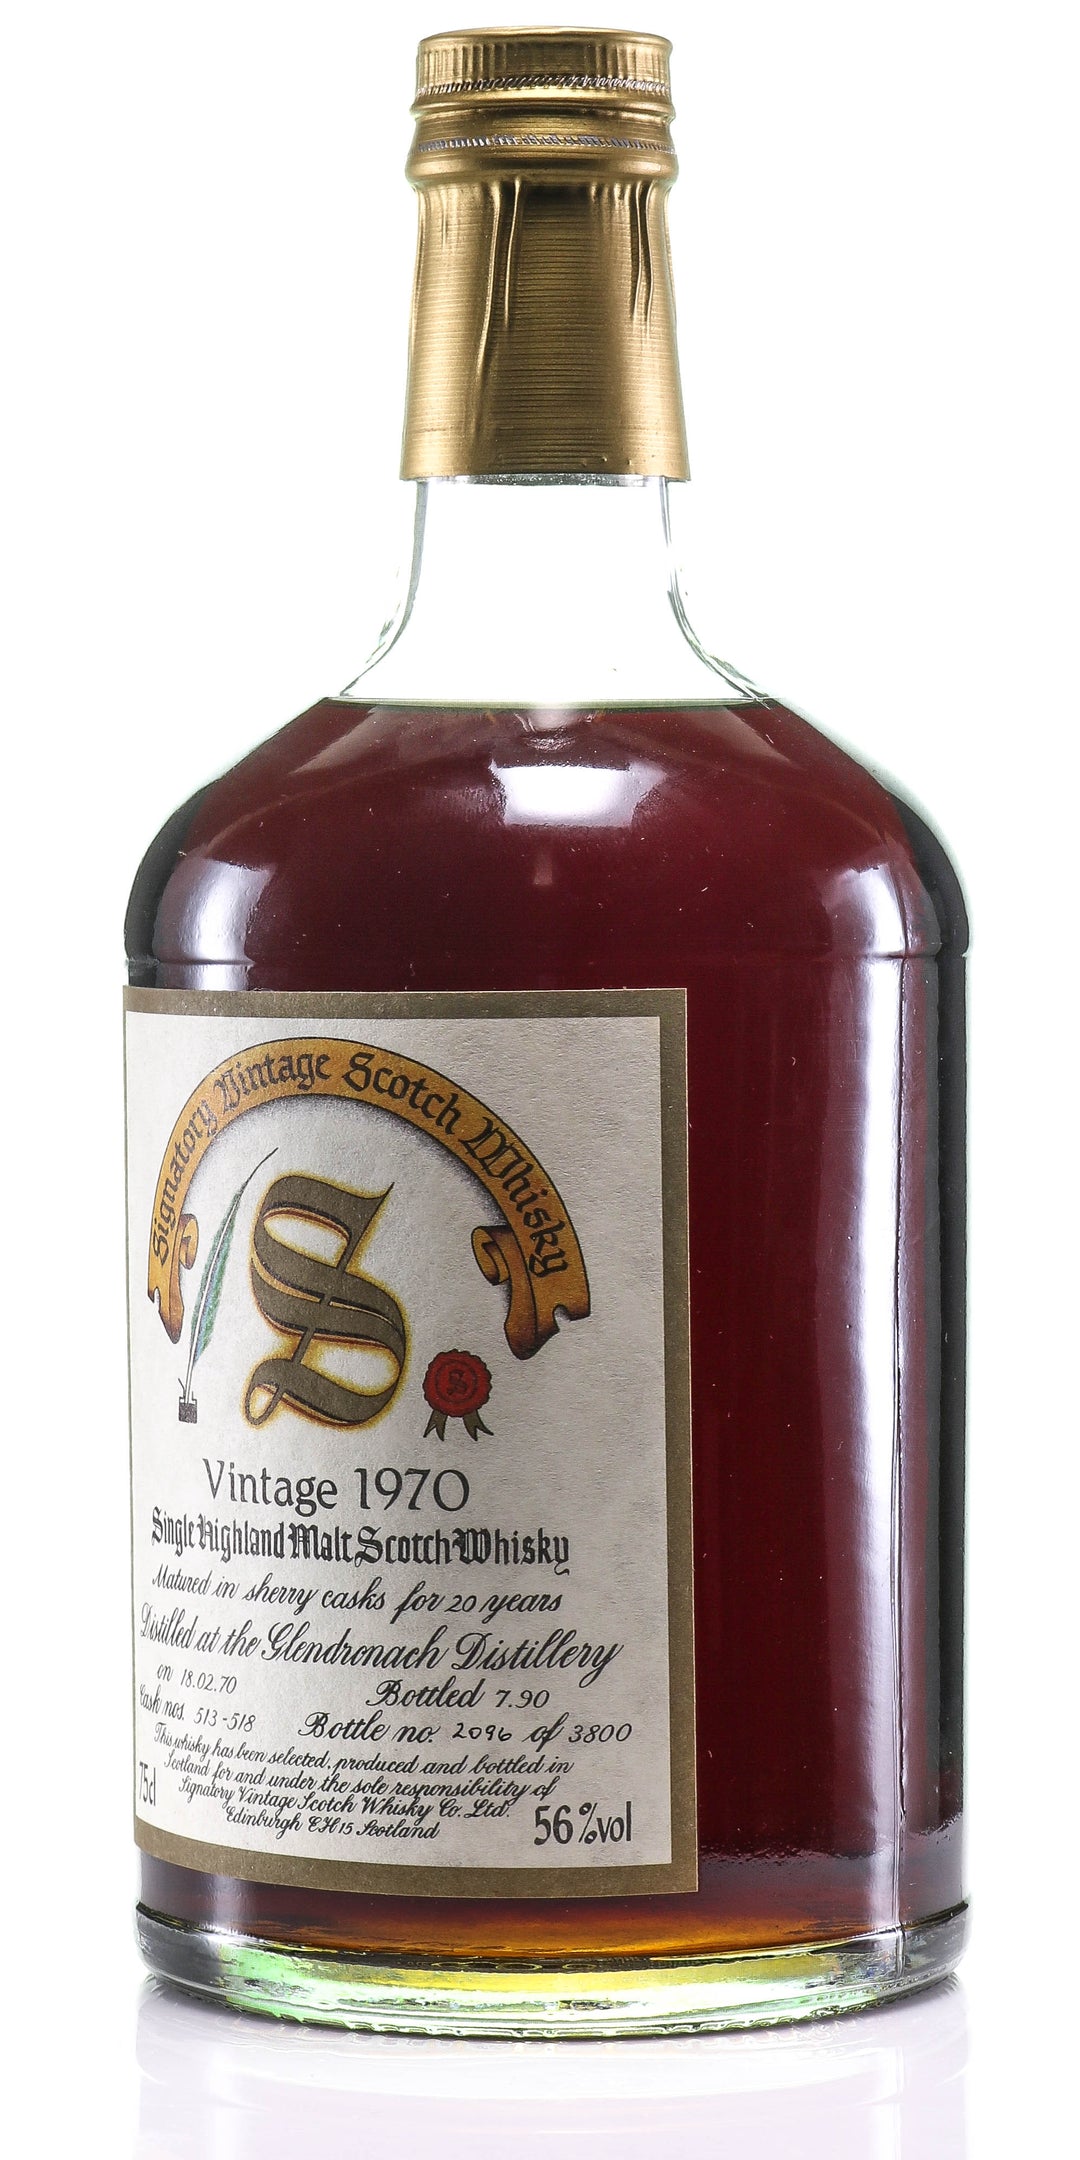 1970 Signatory Vintage Glendronach 20 Year Old Single Malt Scotch Whisky, Highlands, Scotland - legendaryvintages